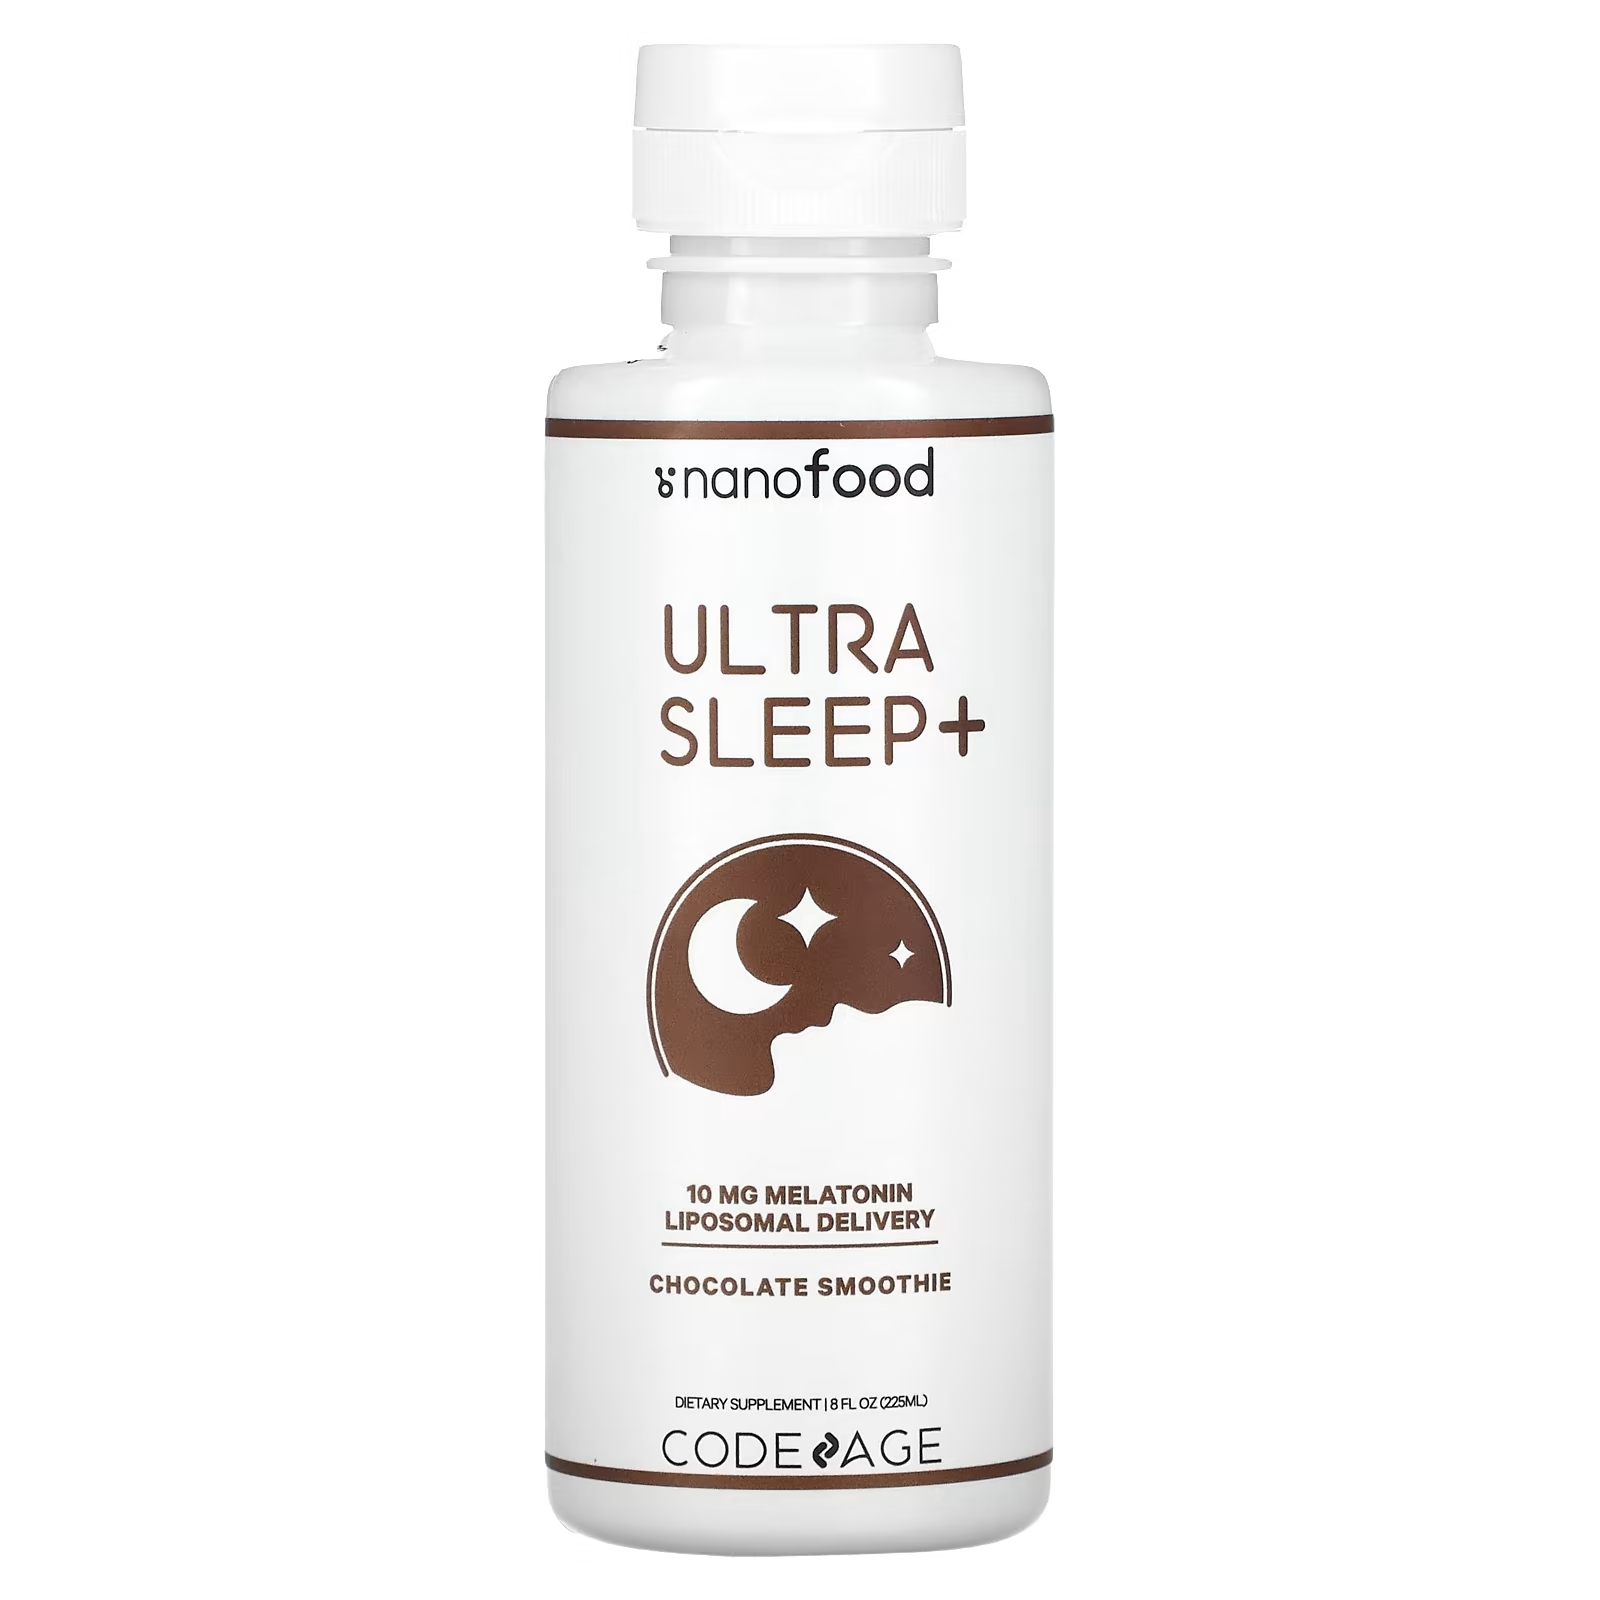 Codeage Ultra Sleep + 10 мг мелатонина липосомальная доставка шоколадный смузи, 225 мл набор для чайной церемониибутоны лотосагайвань 100 мл 2 пиалы по 25 мл